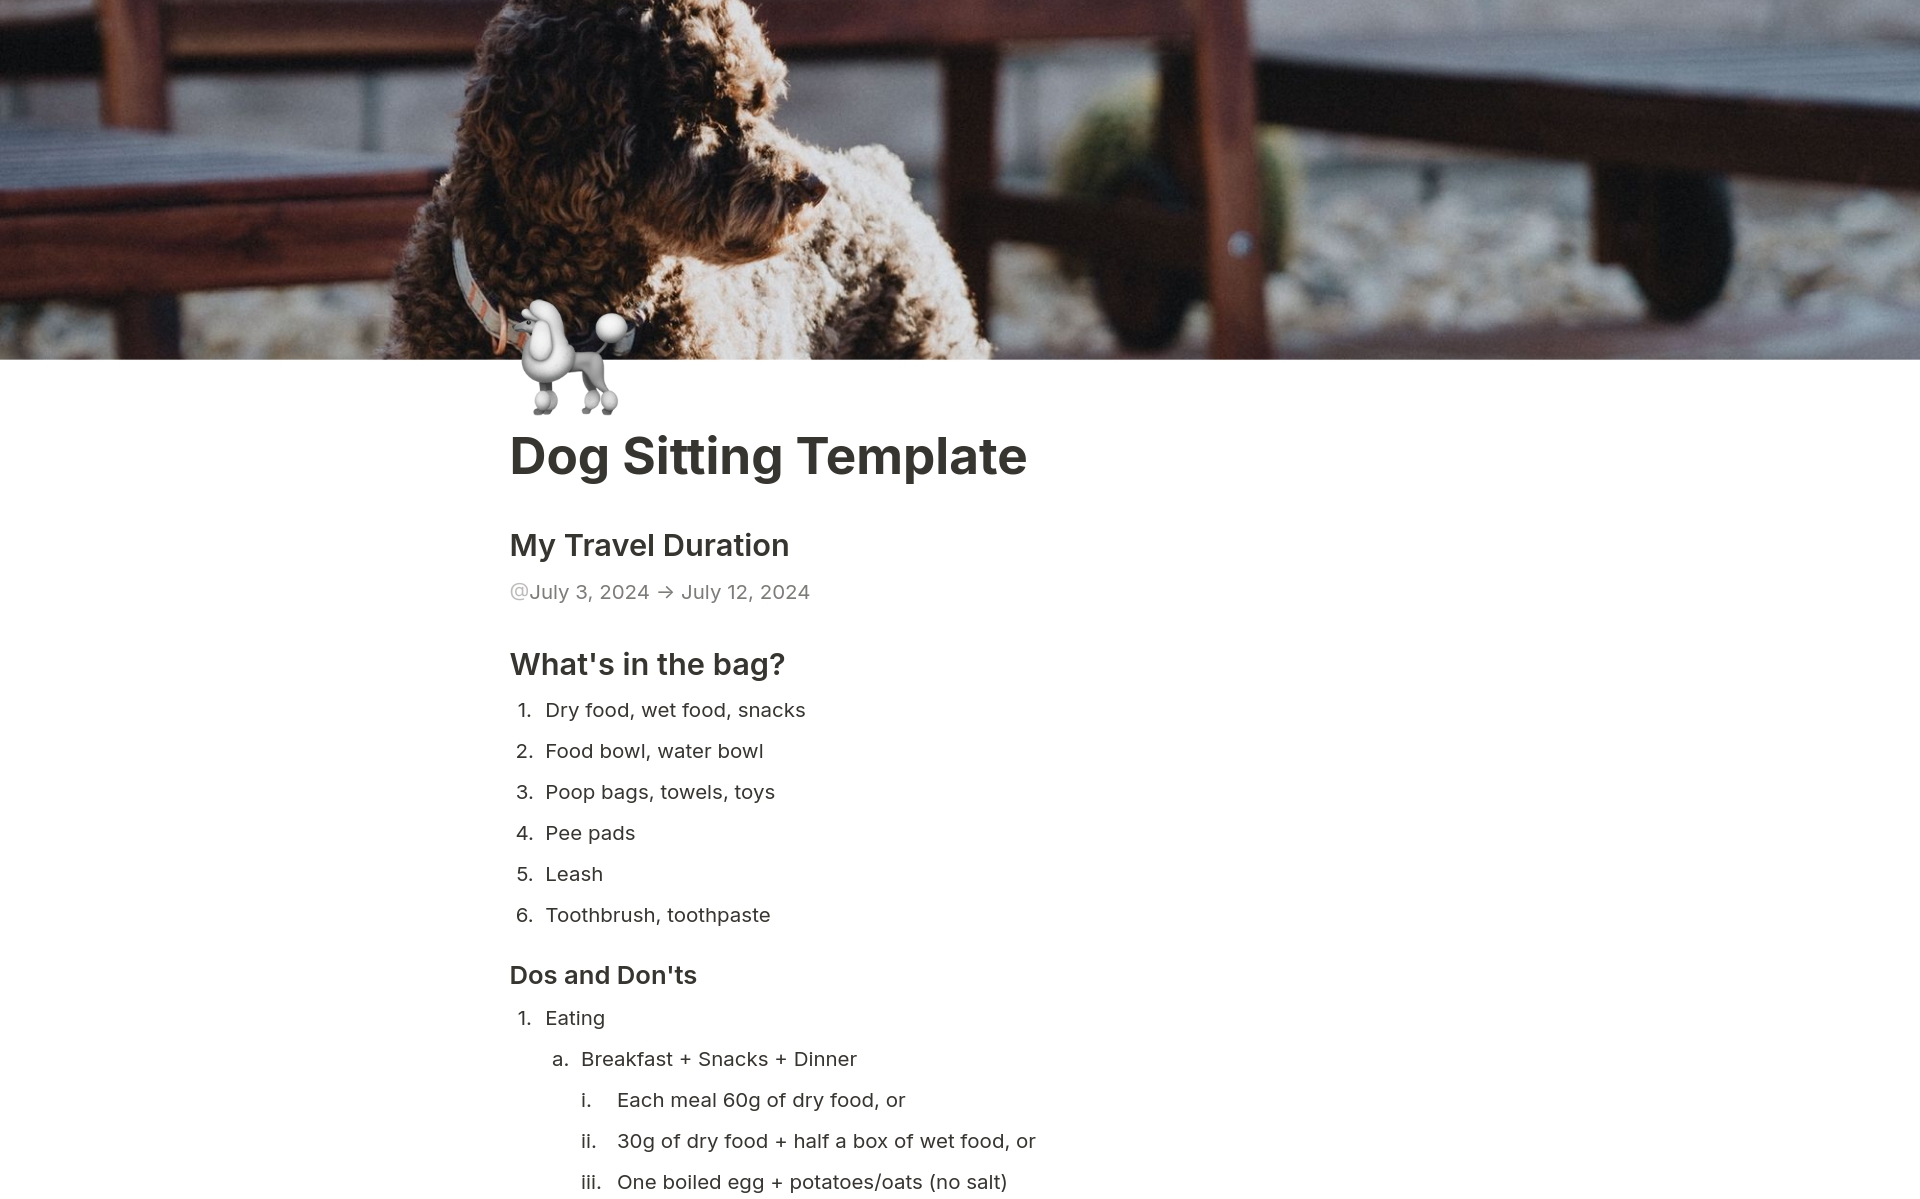 Aperçu du modèle de Dog Sitting for Travel